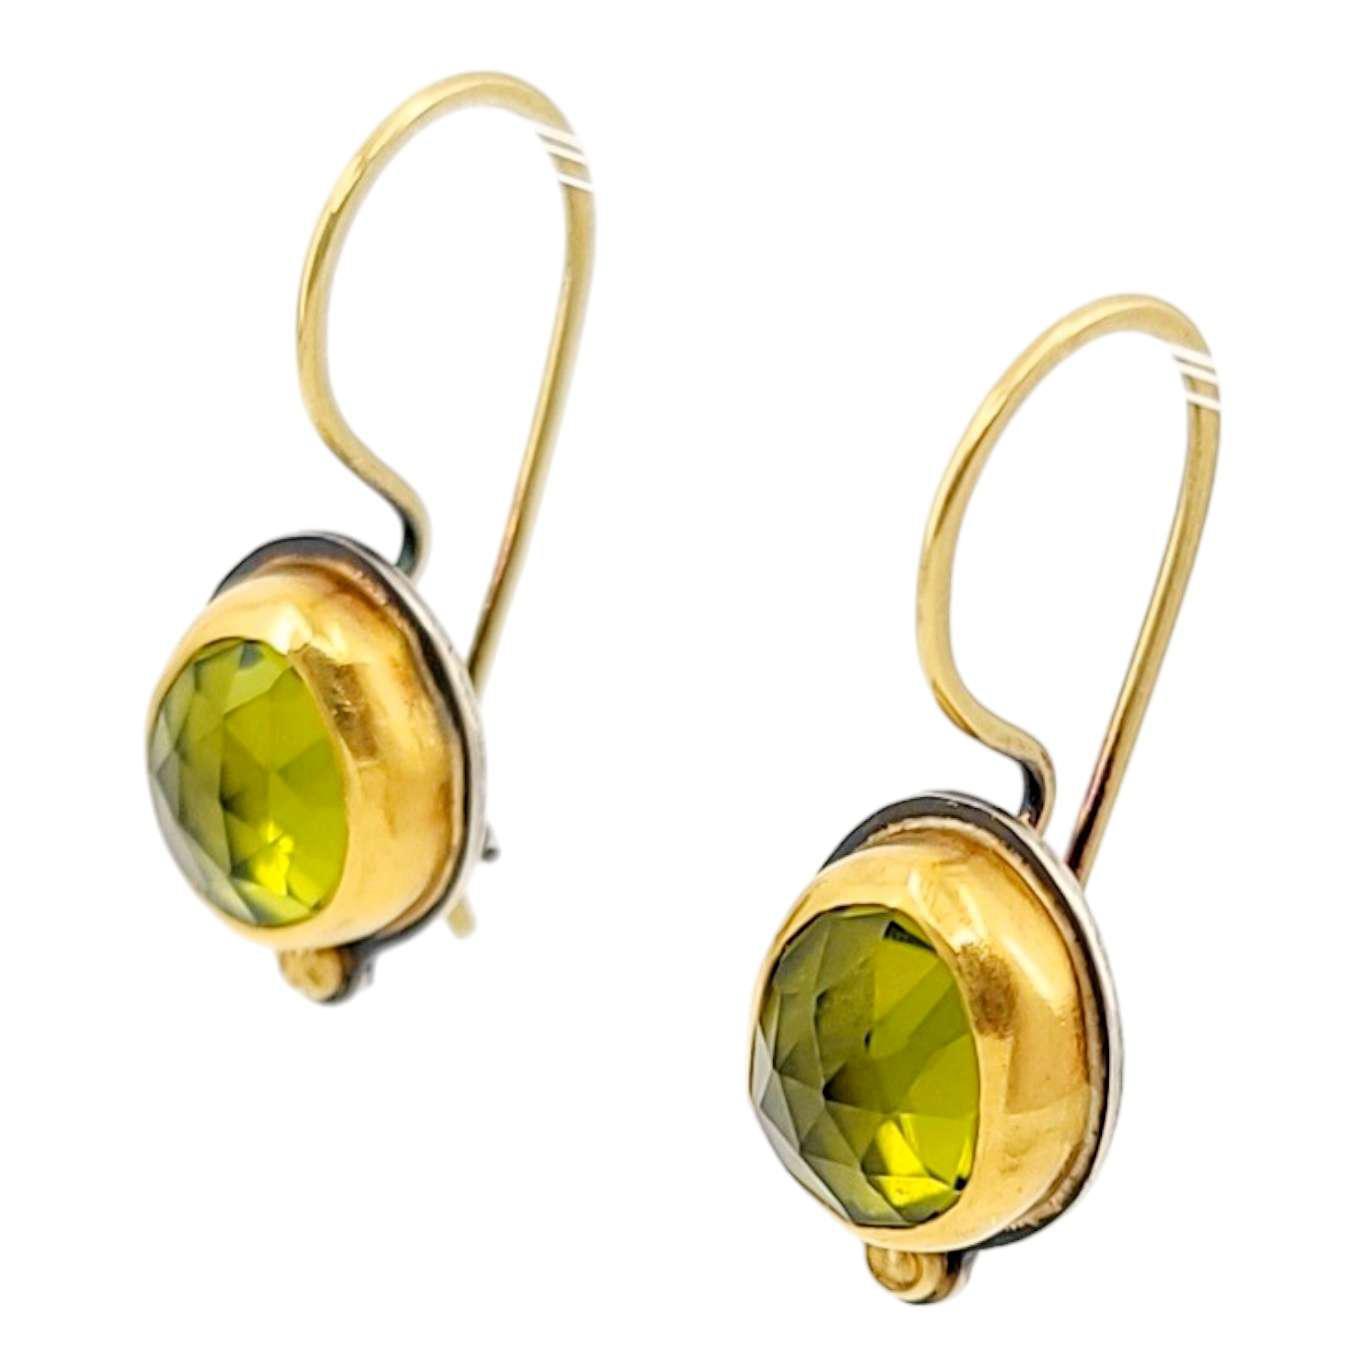 Earrings - Rose Cut Peridot in 18k and 14k Gold with Sterling Silver by Allison Kallaway